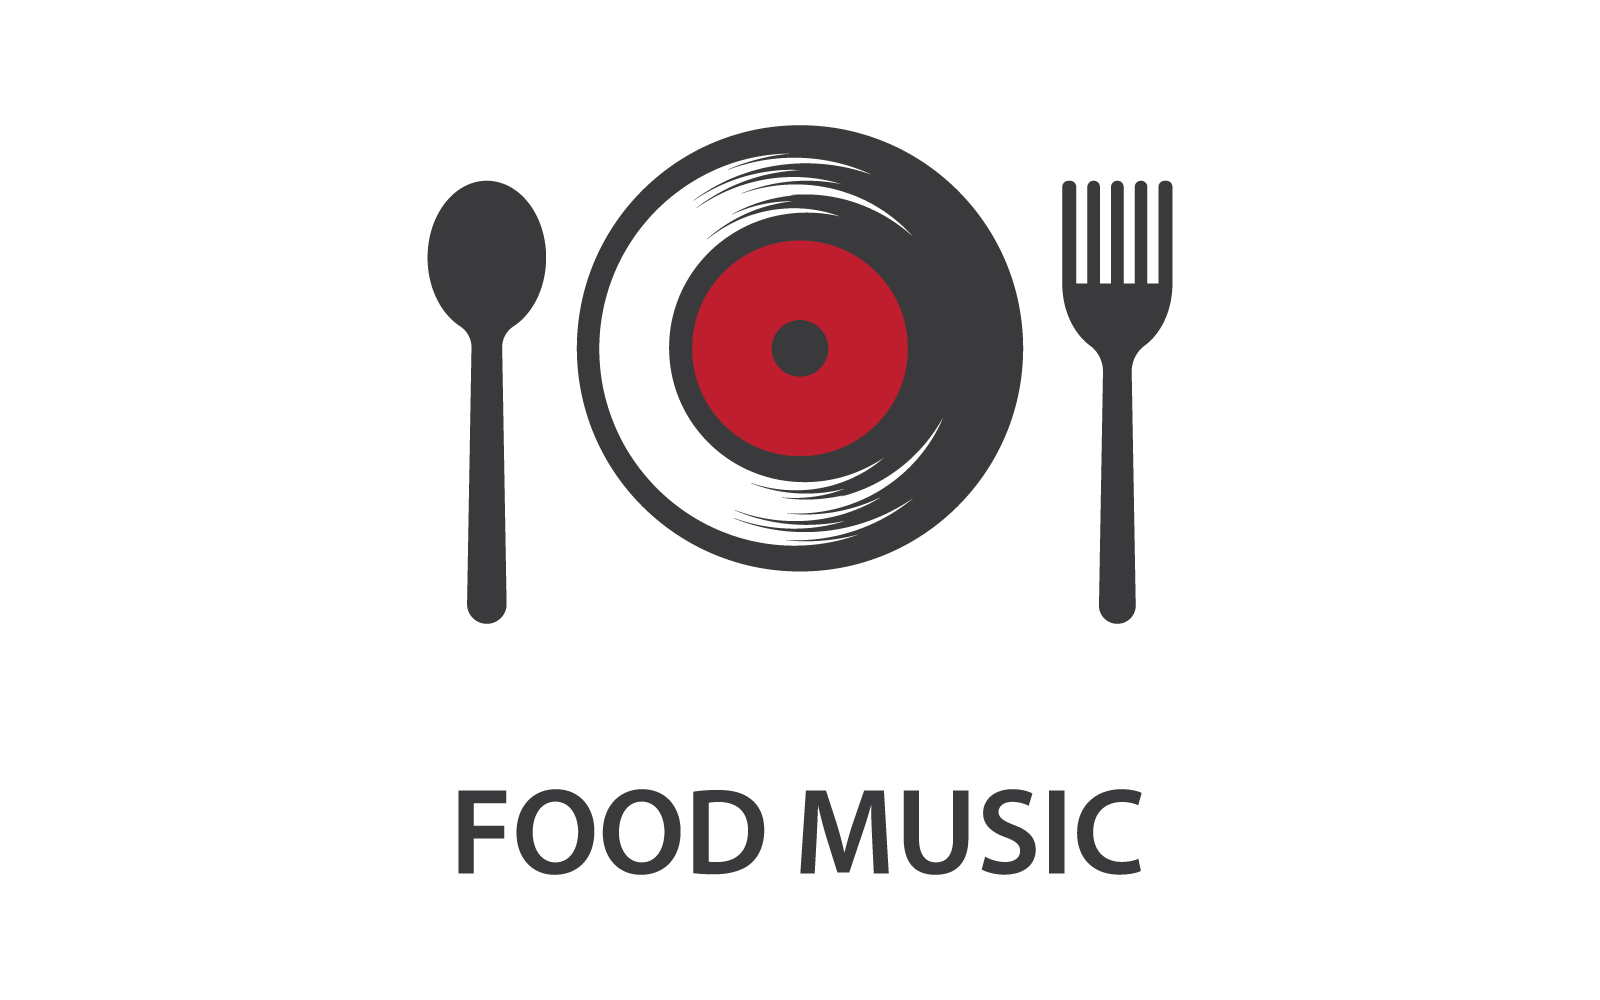 Music food illustration vector design Logo Template